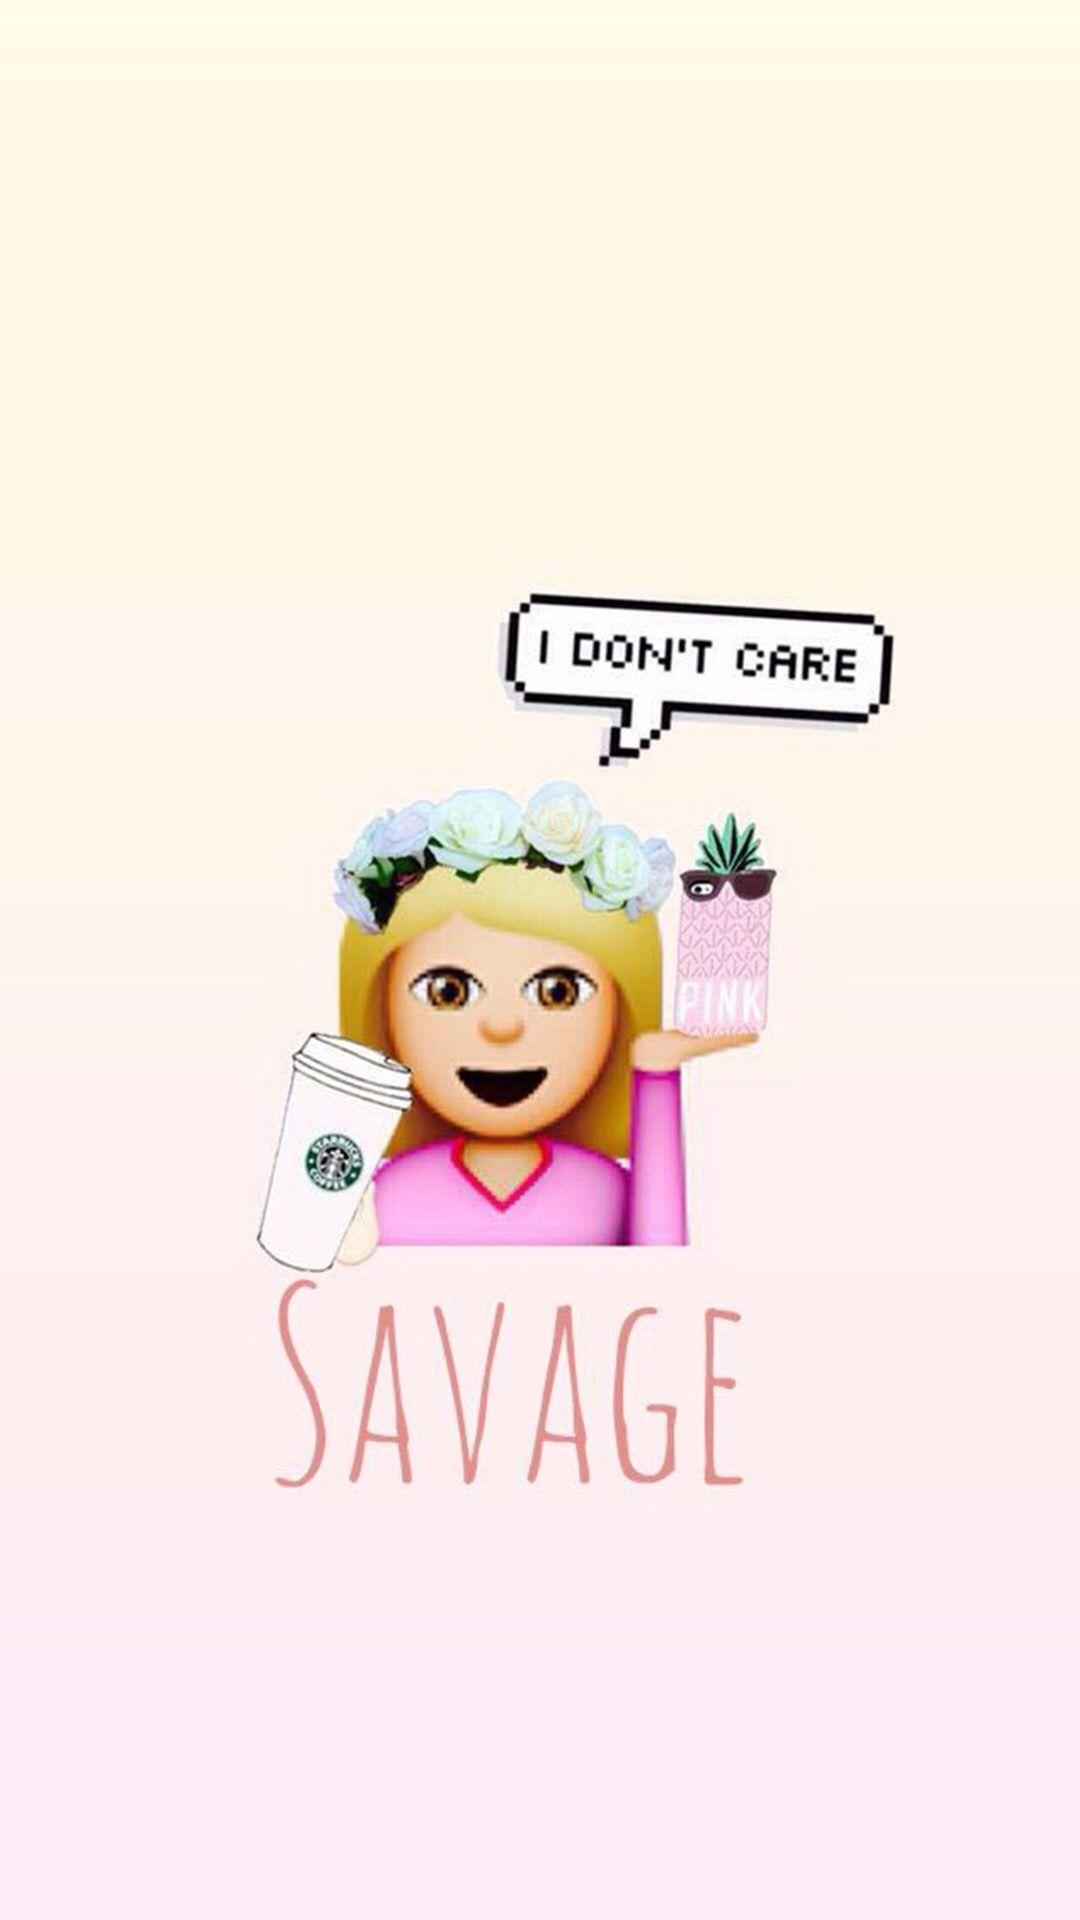 Cute Savage Logo - Savage wallpaper | Wallpapers! in 2019 | Pinterest | Emoji wallpaper ...